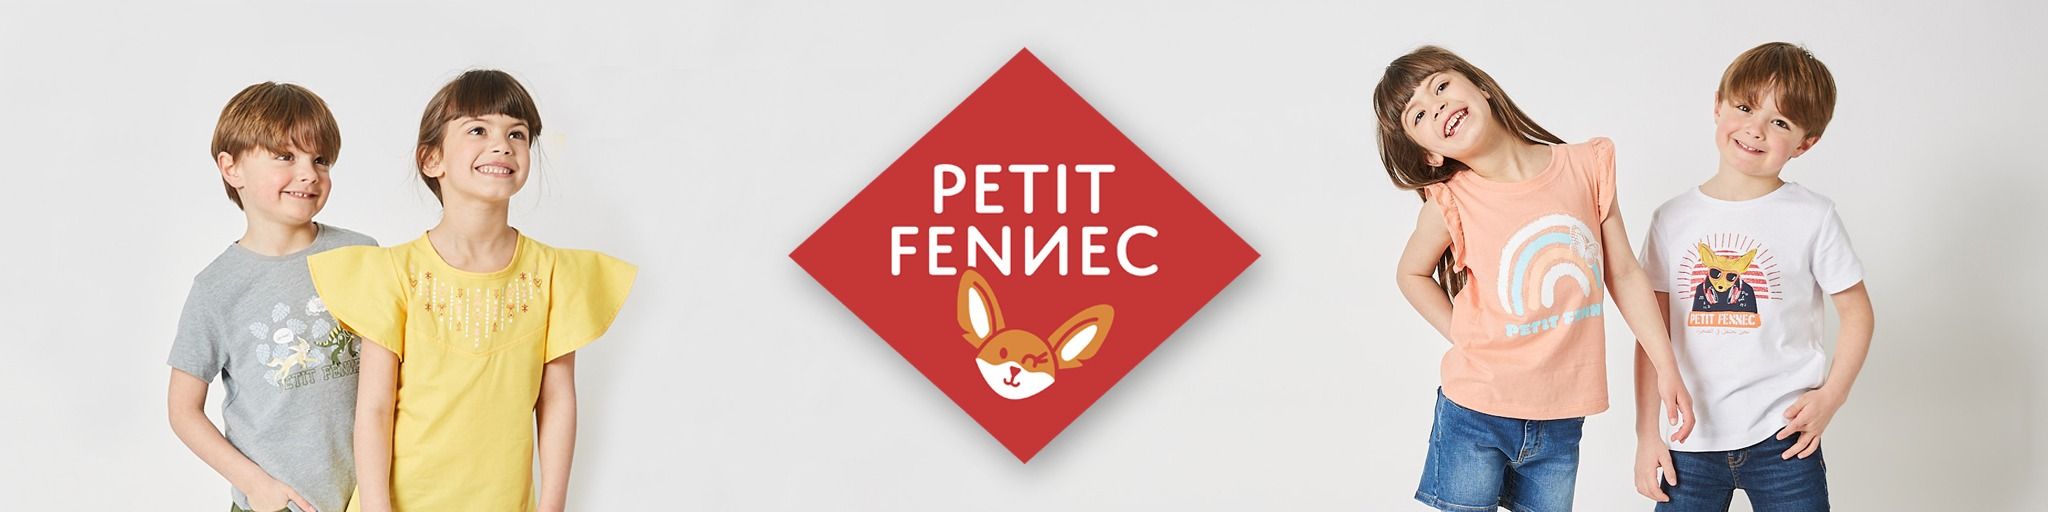 Petit Fennec